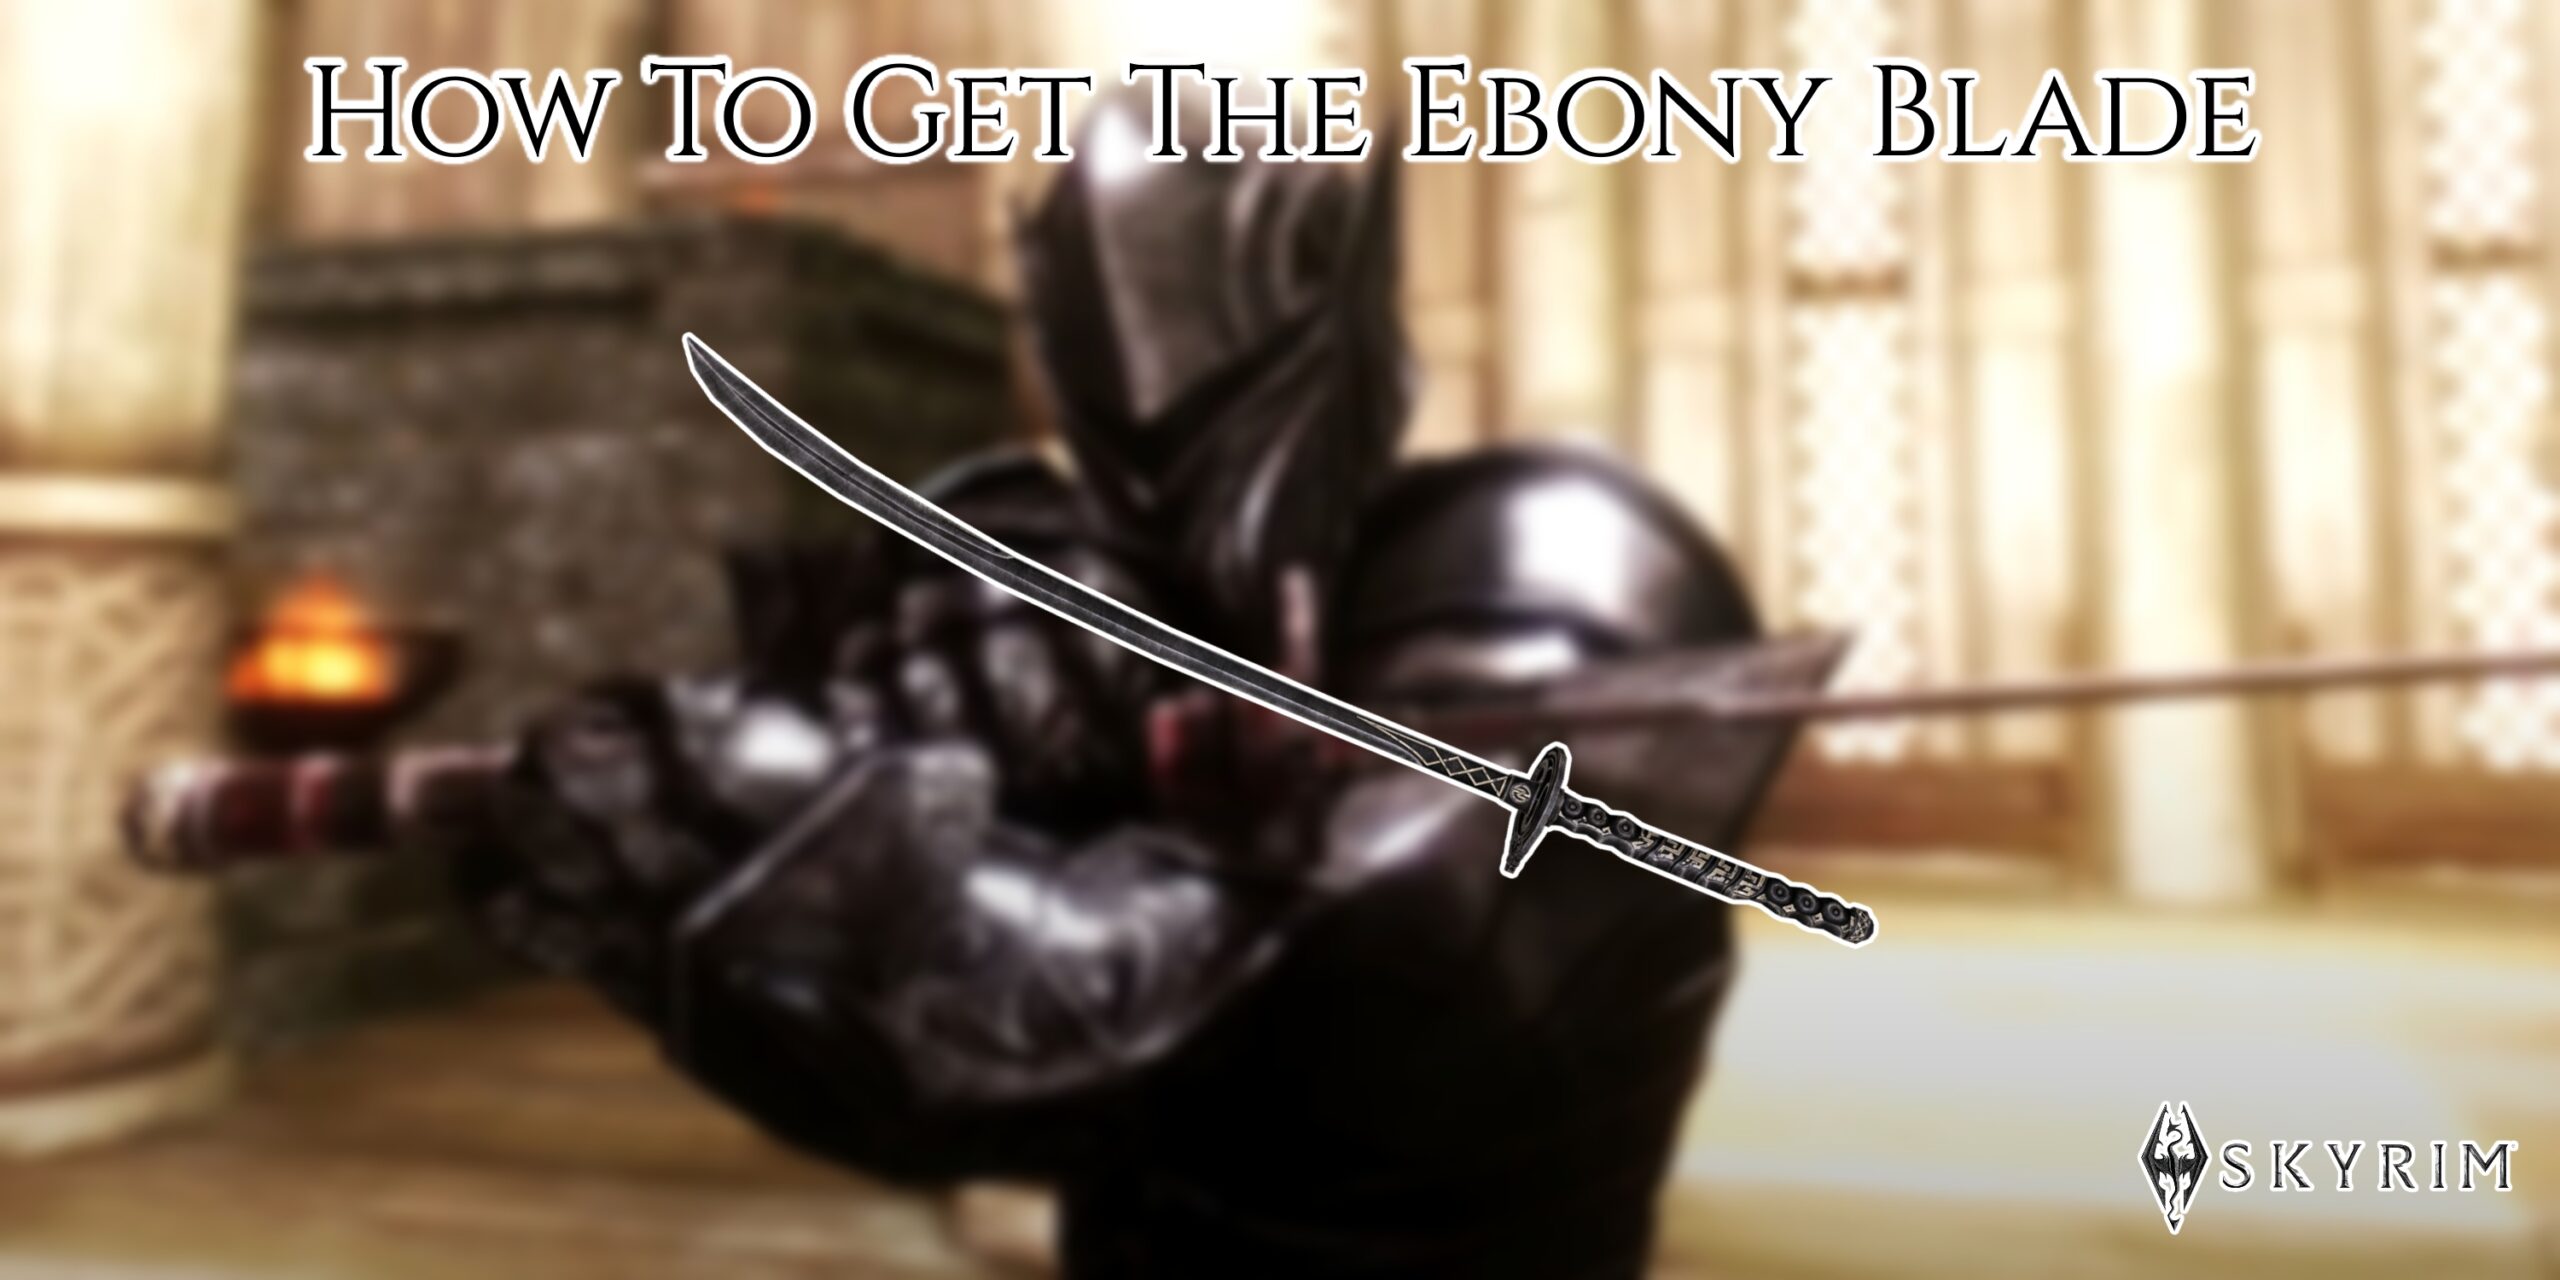 How does the ebony blade work